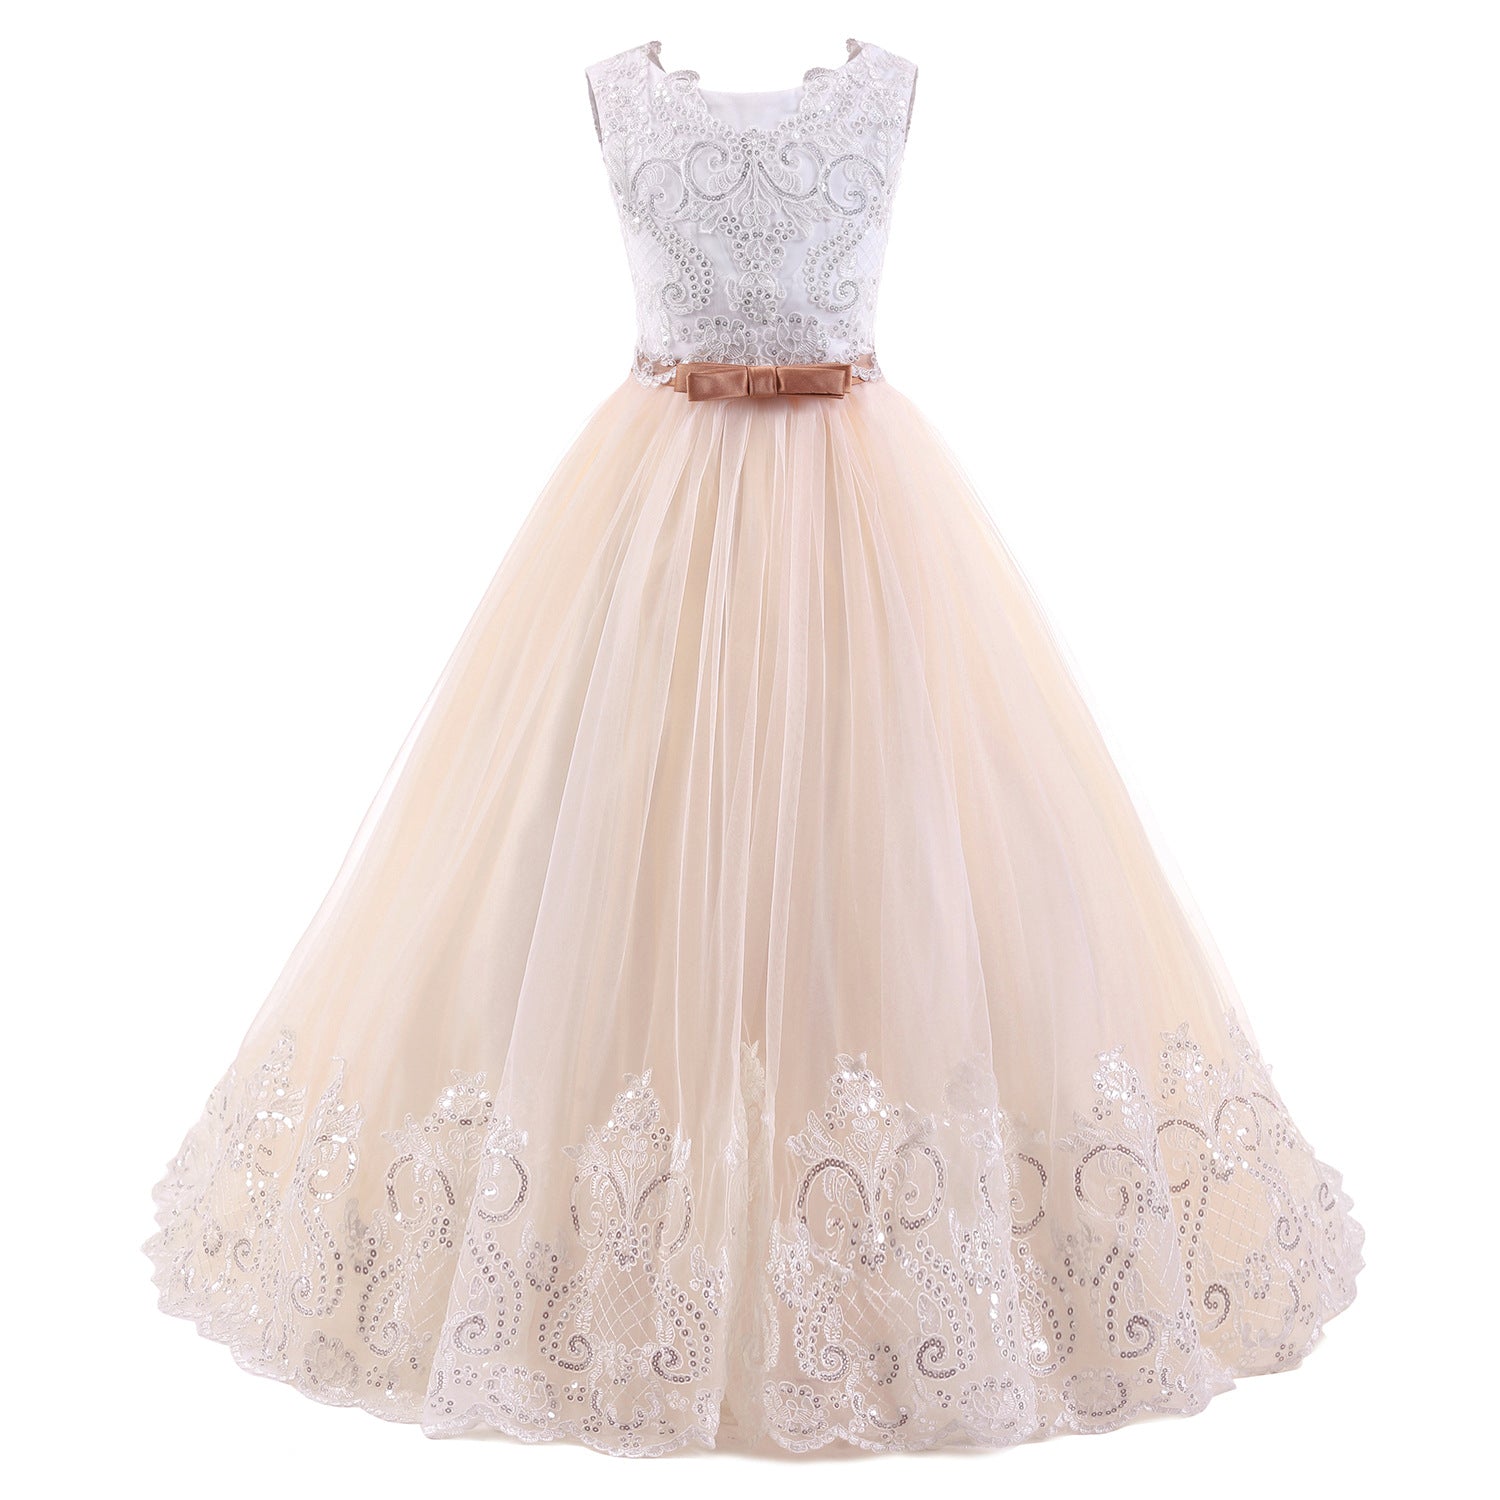 Flower Girl Secquin Dresses for Wedding Birthday Dresses Pageant Dresses Communion Ball Gowns Princess Dresses